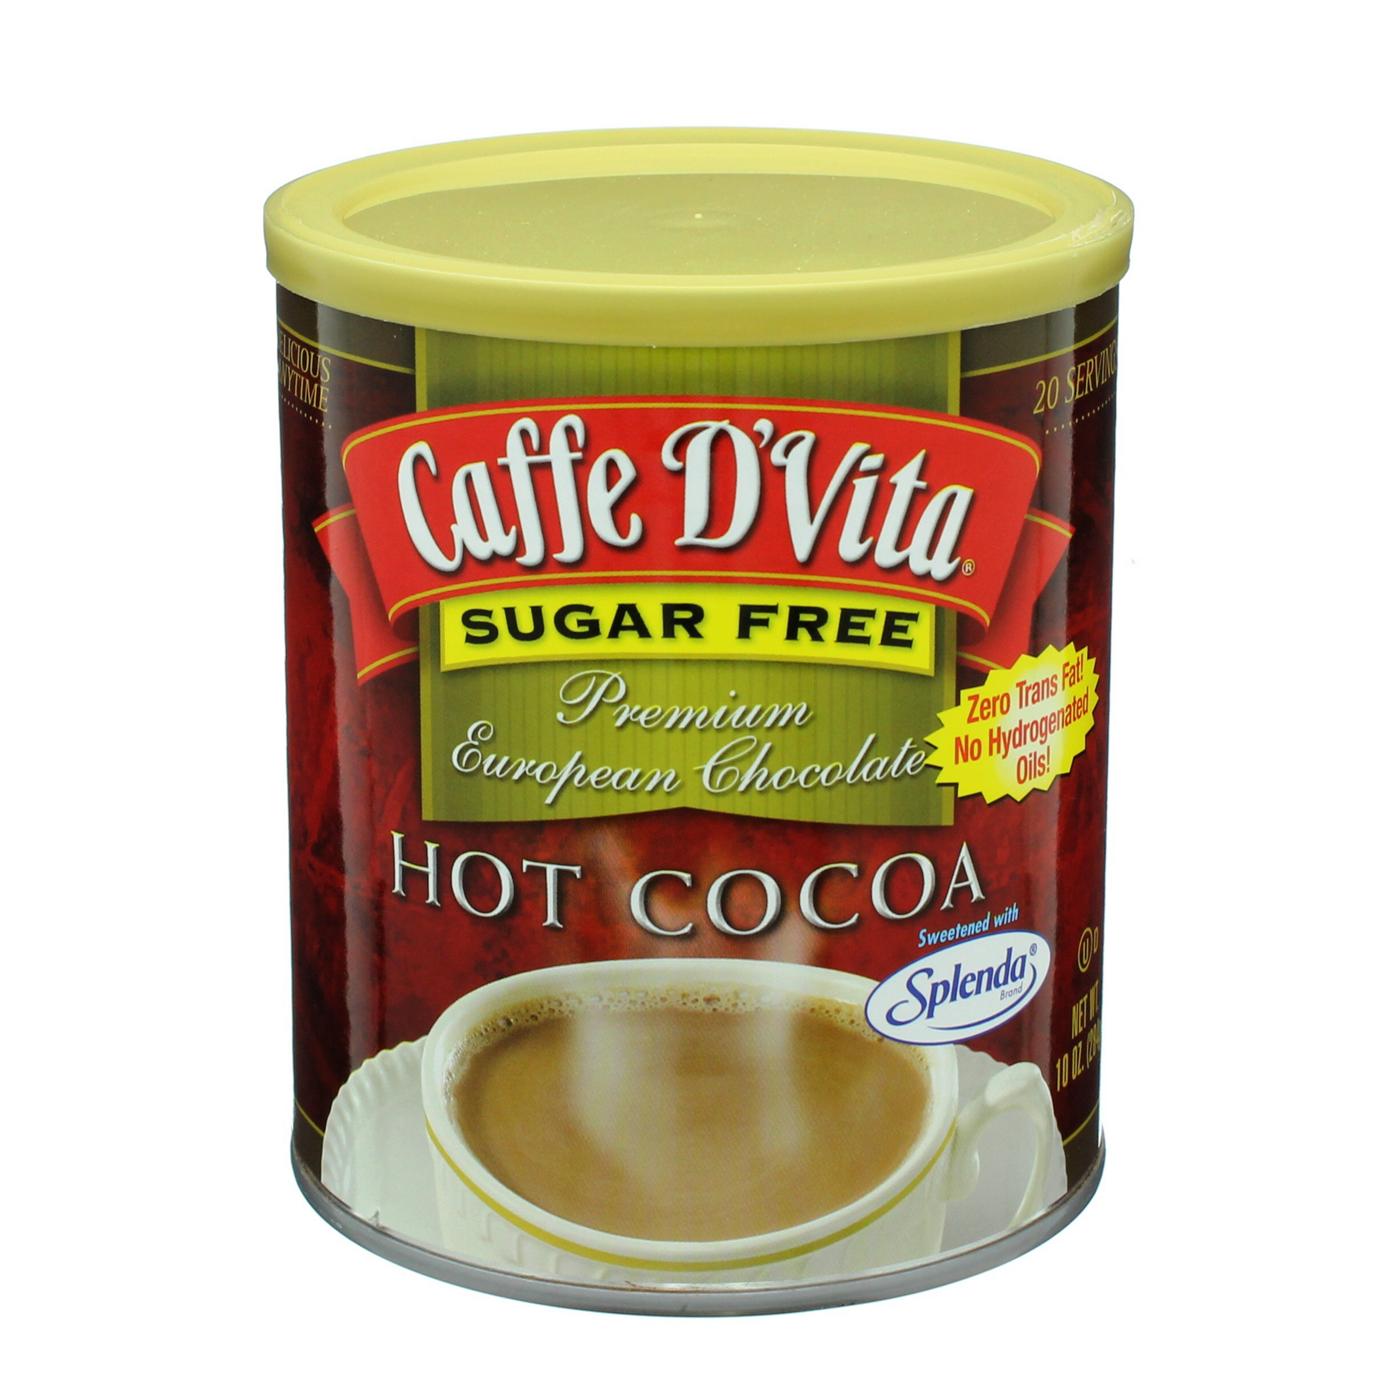 Caffe D'Vita Sugar Free Hot Cocoa Mix; image 1 of 2